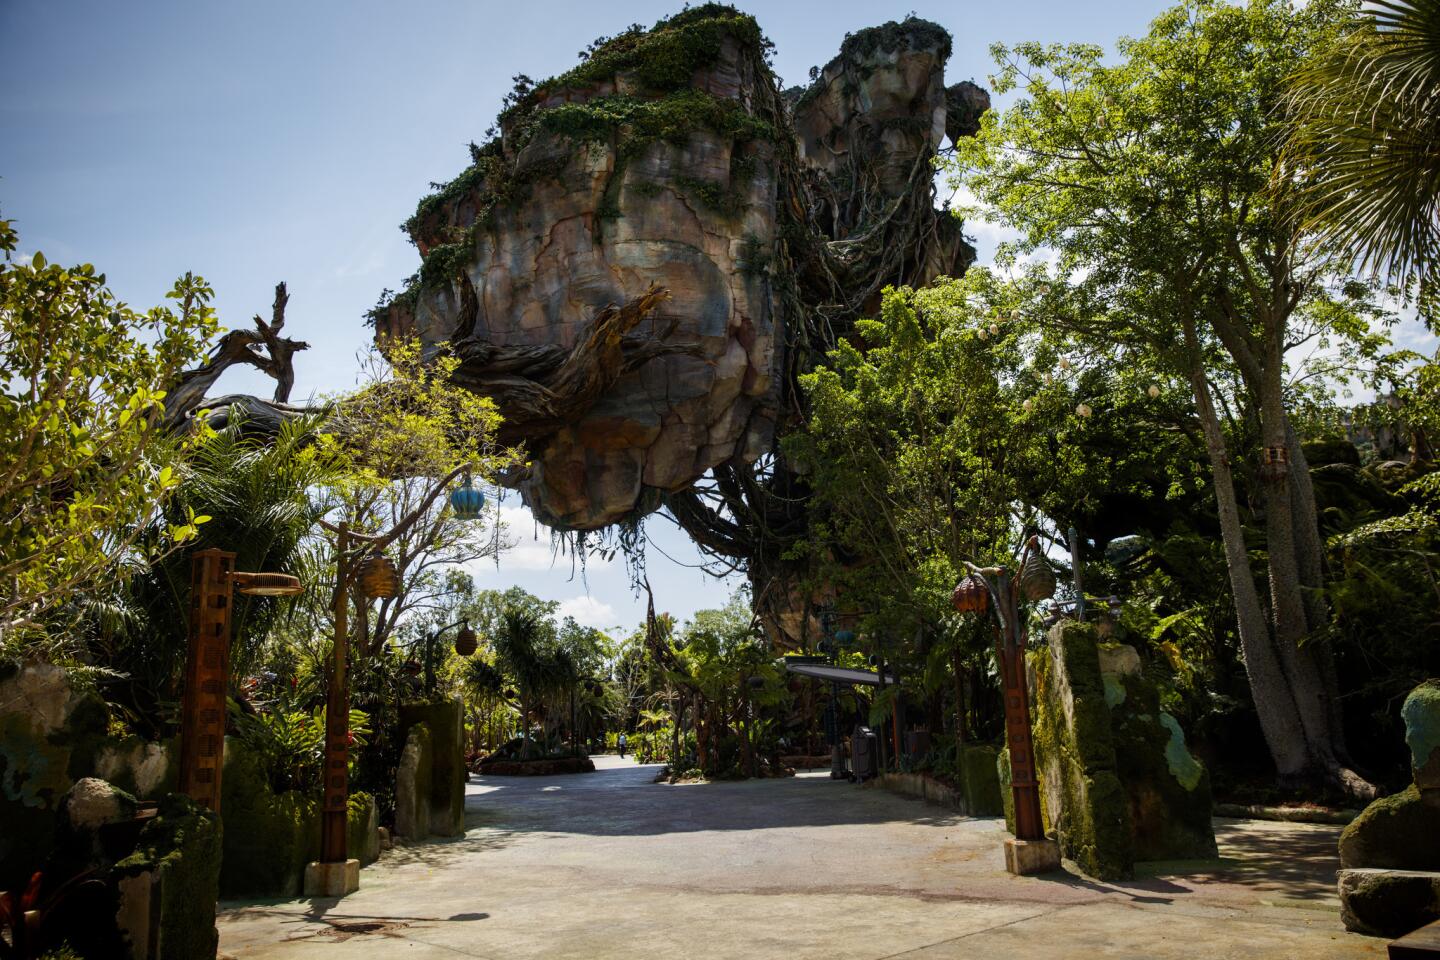 Inside Disney World's Pandora